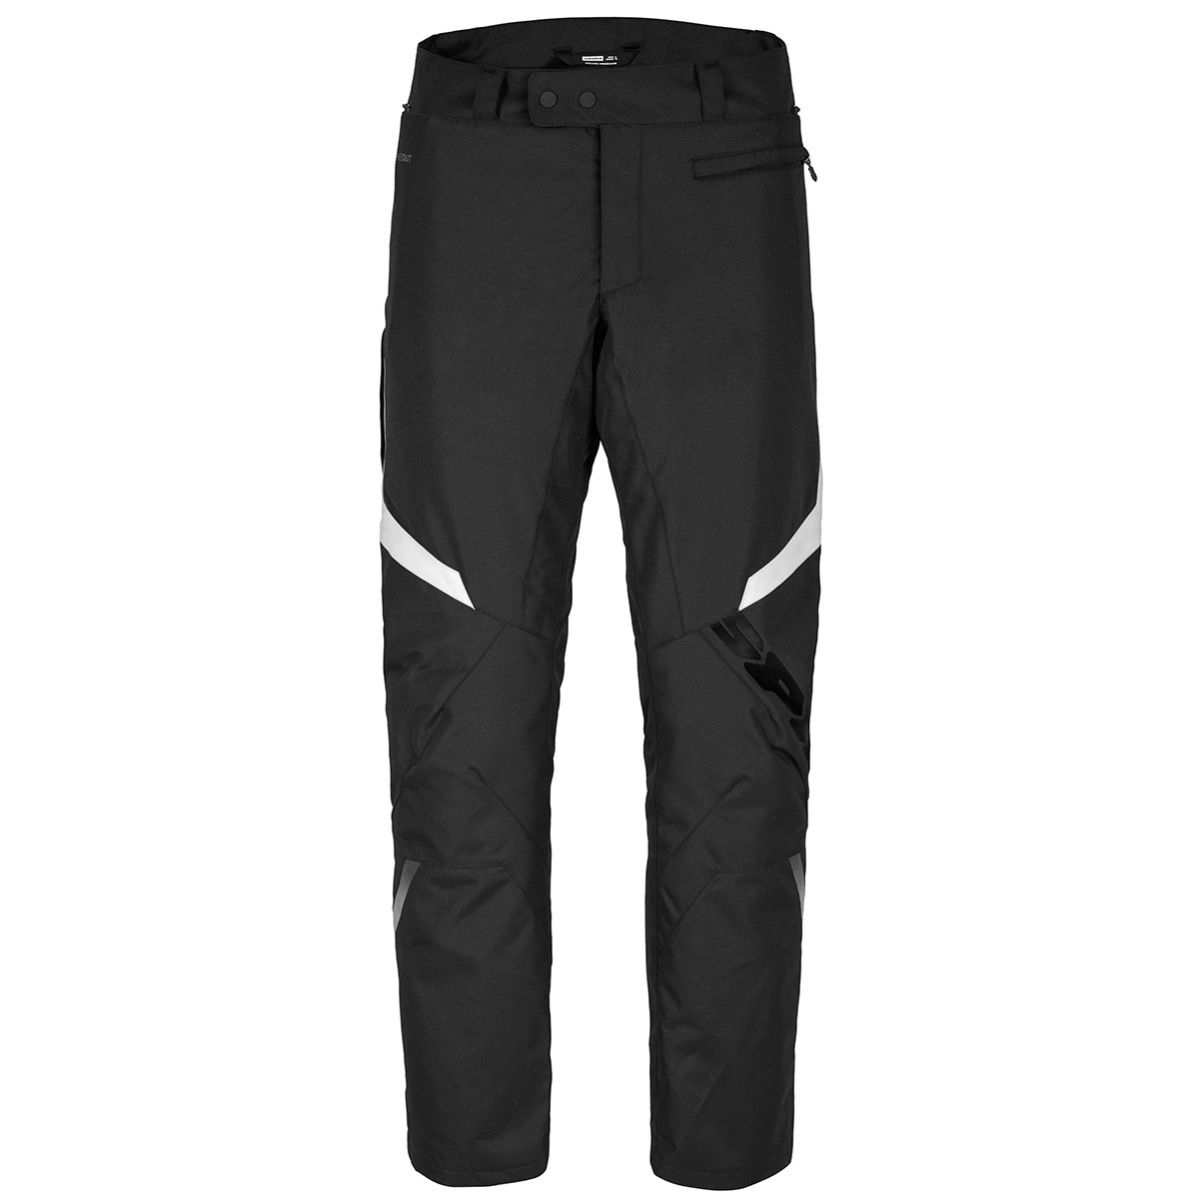 Image of Spidi Sportmaster Pants Black White Size S ID 8030161478112